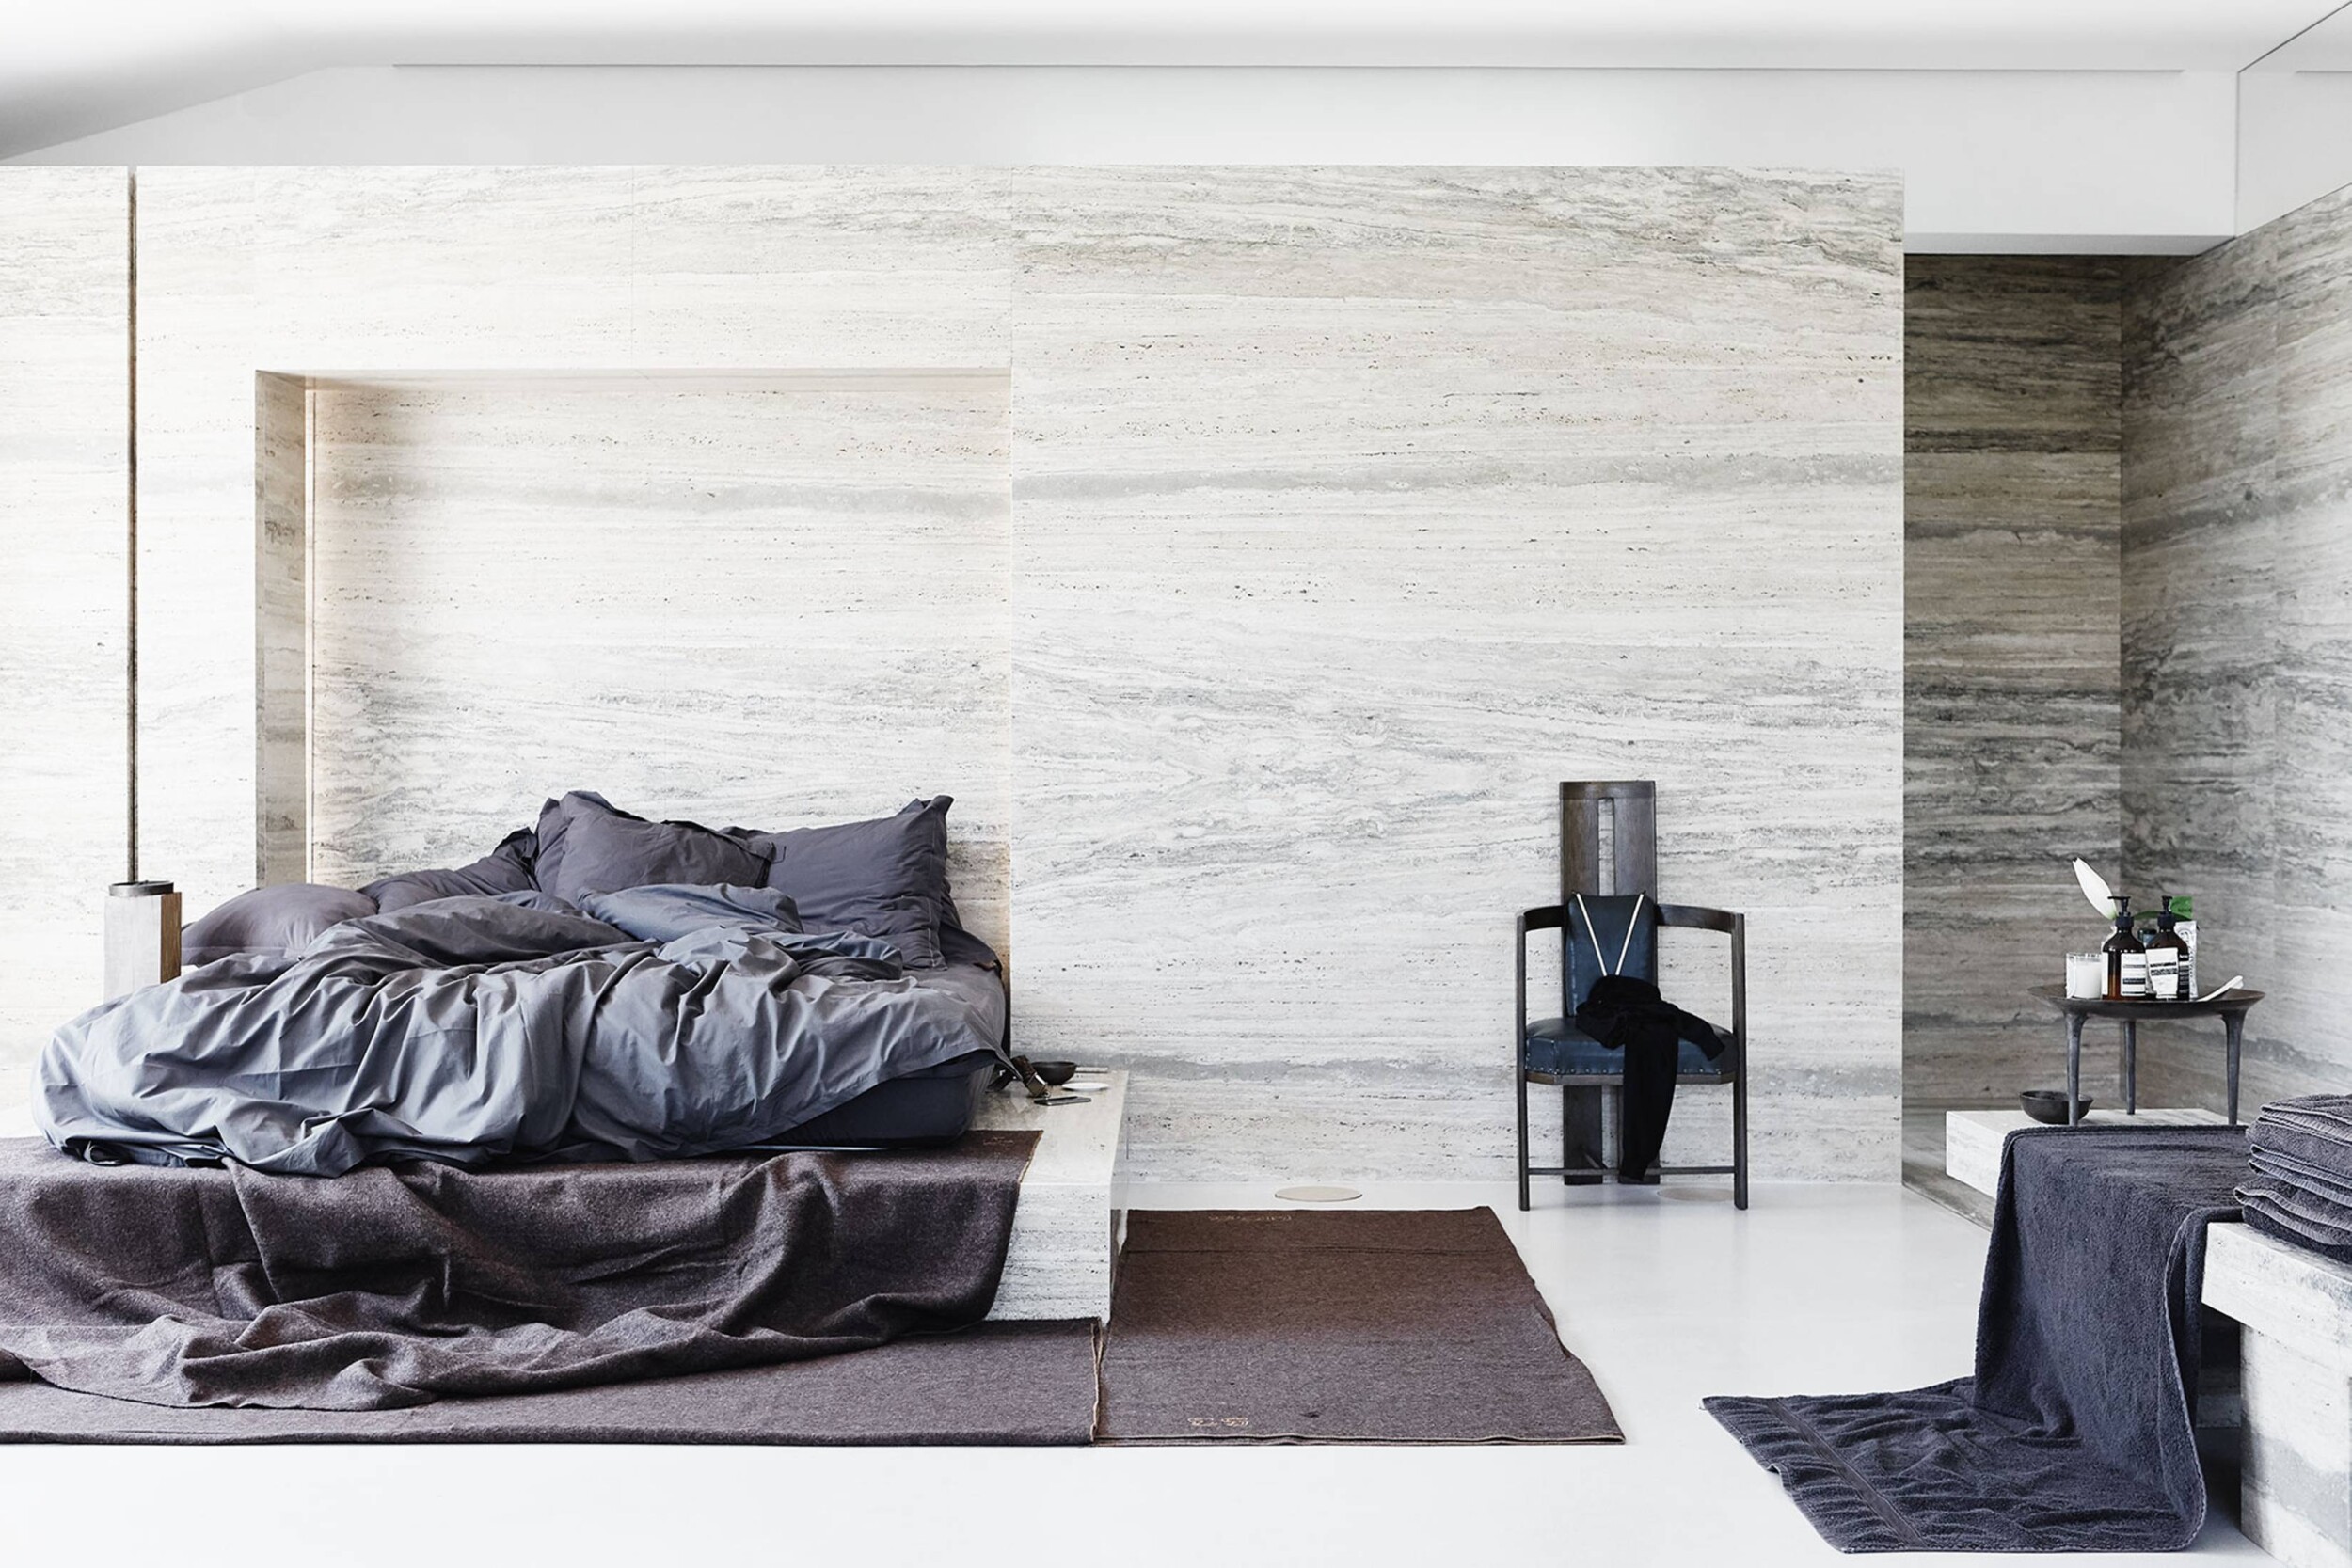 20 Classic Interior Design Styles Defined Decor Aid